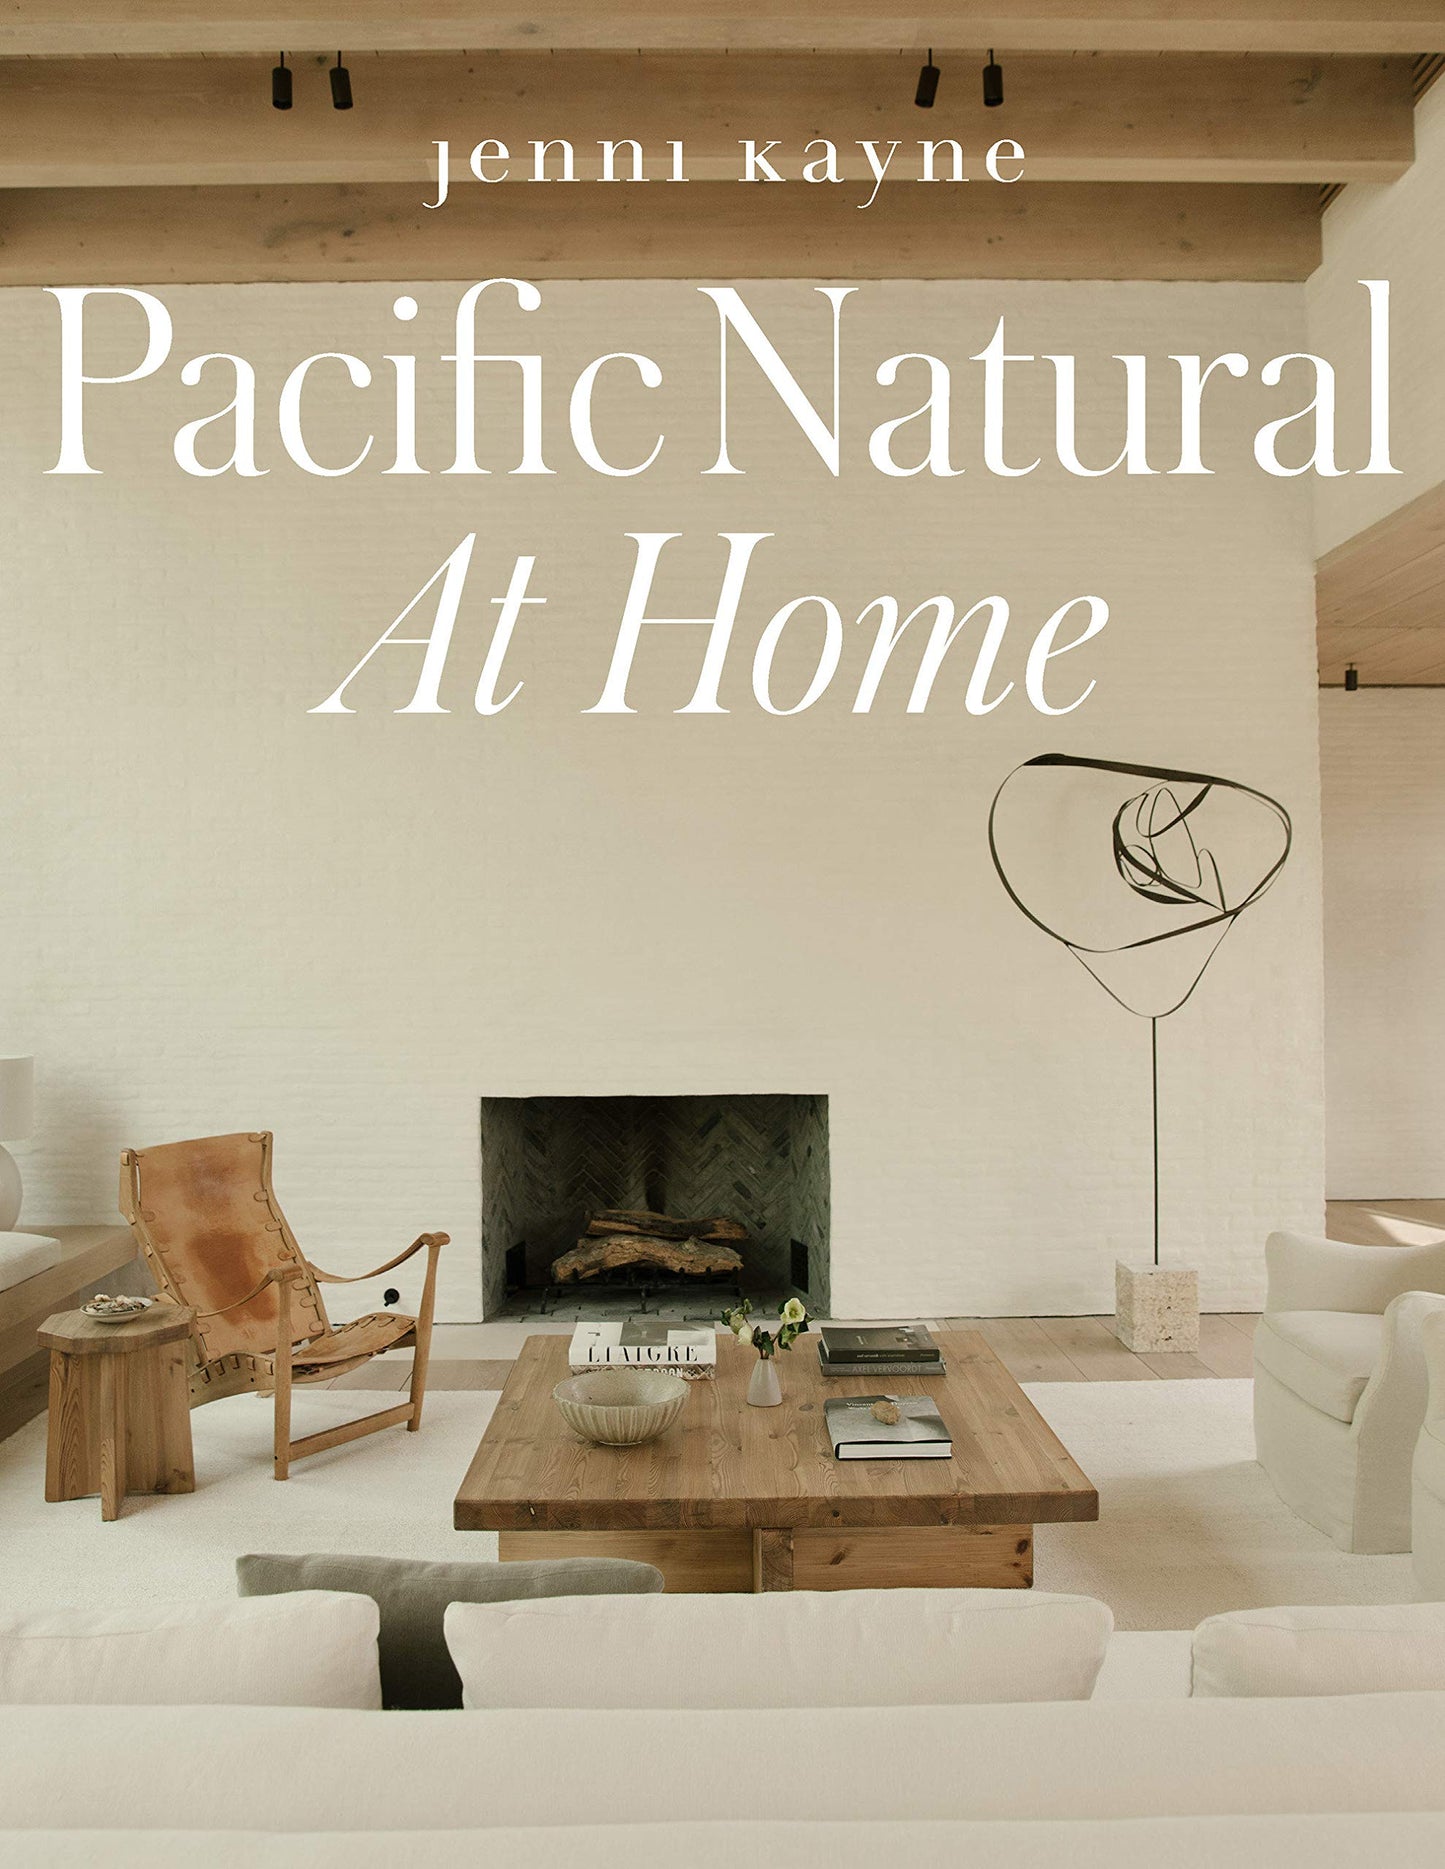 Pacific Natural - At Home